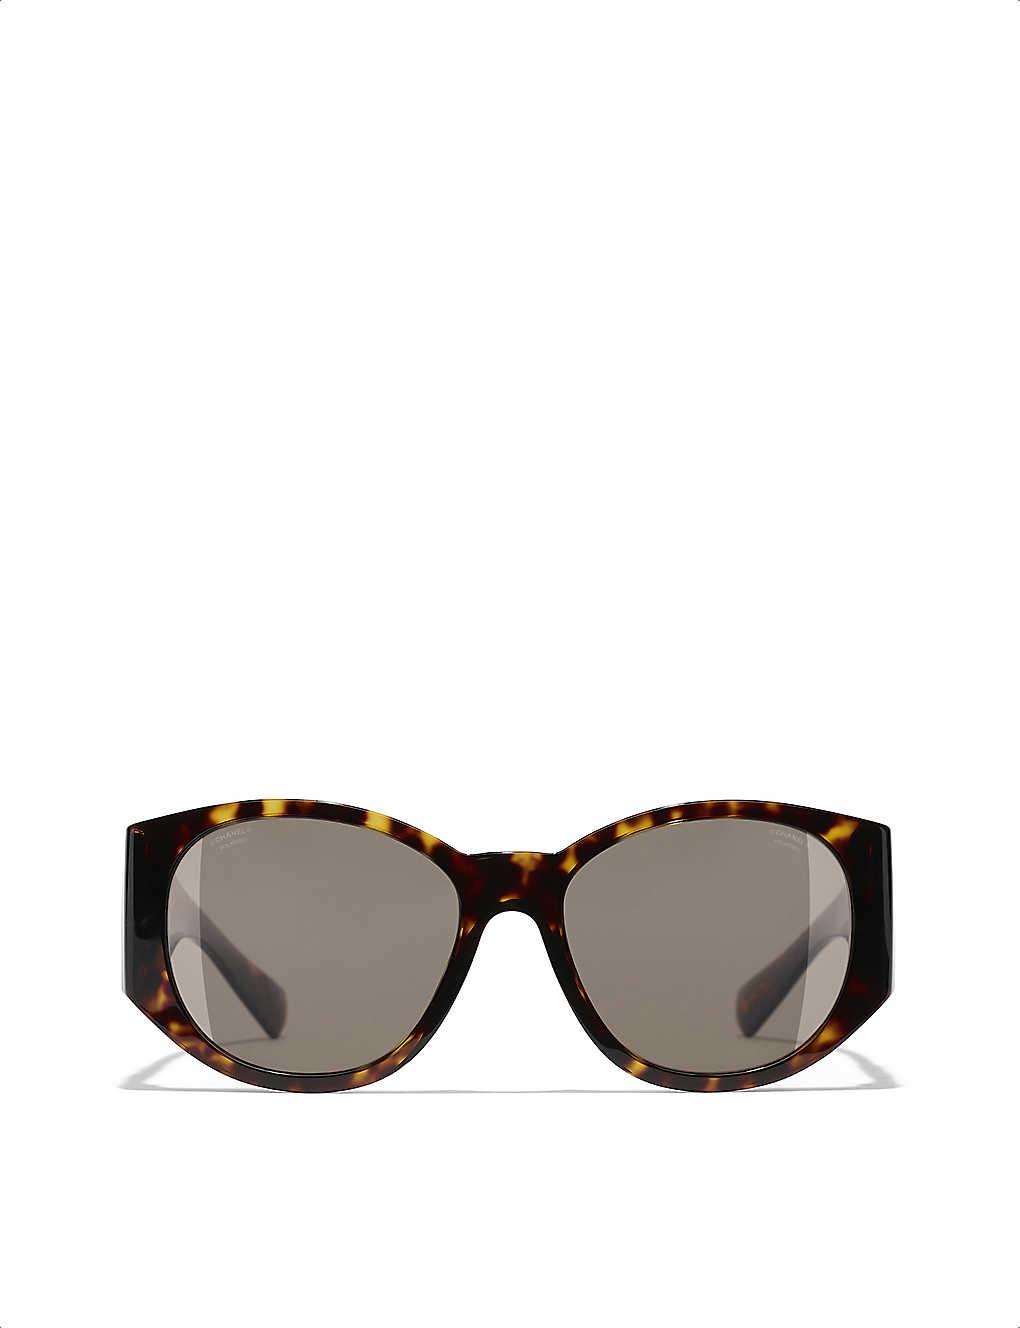 Chanel Oval Sunglasses in Gray